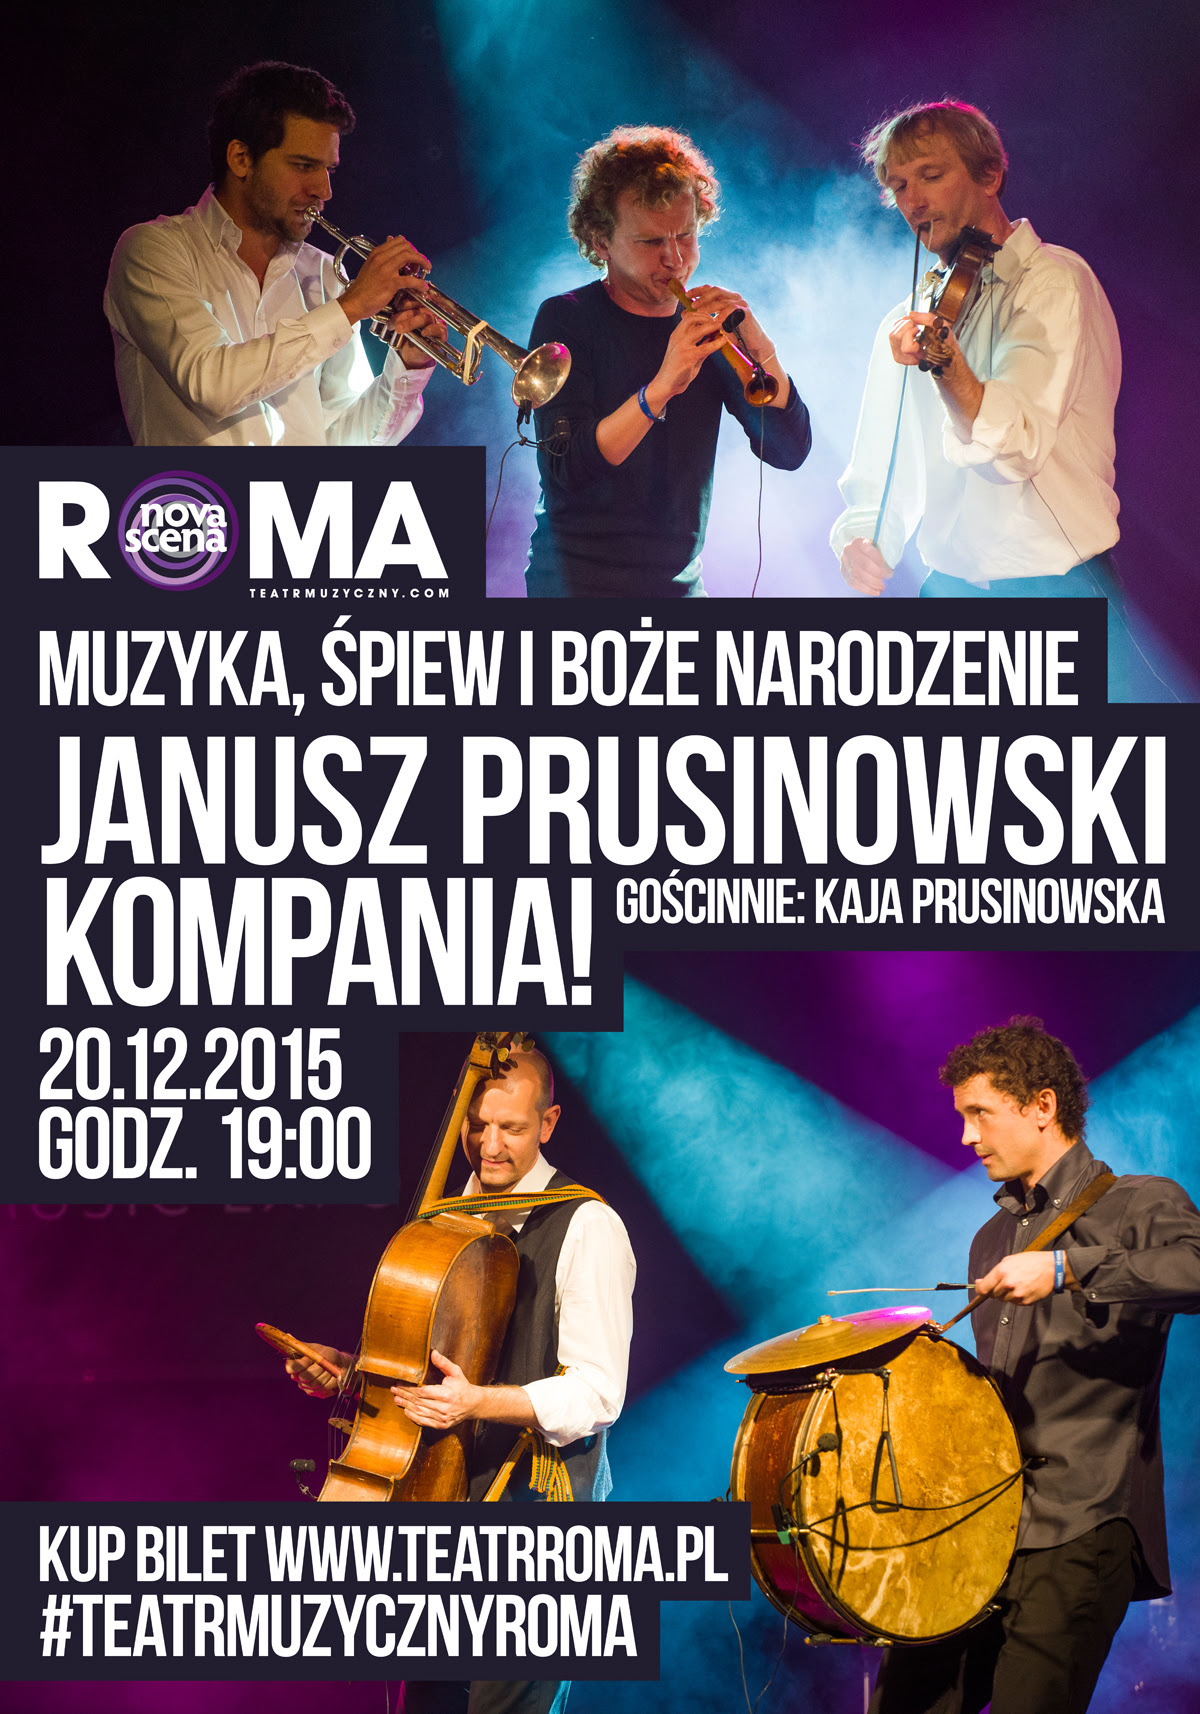 Janusz Prusinowski Kompania − plakat (źródło: materiały prasowe organizatora)